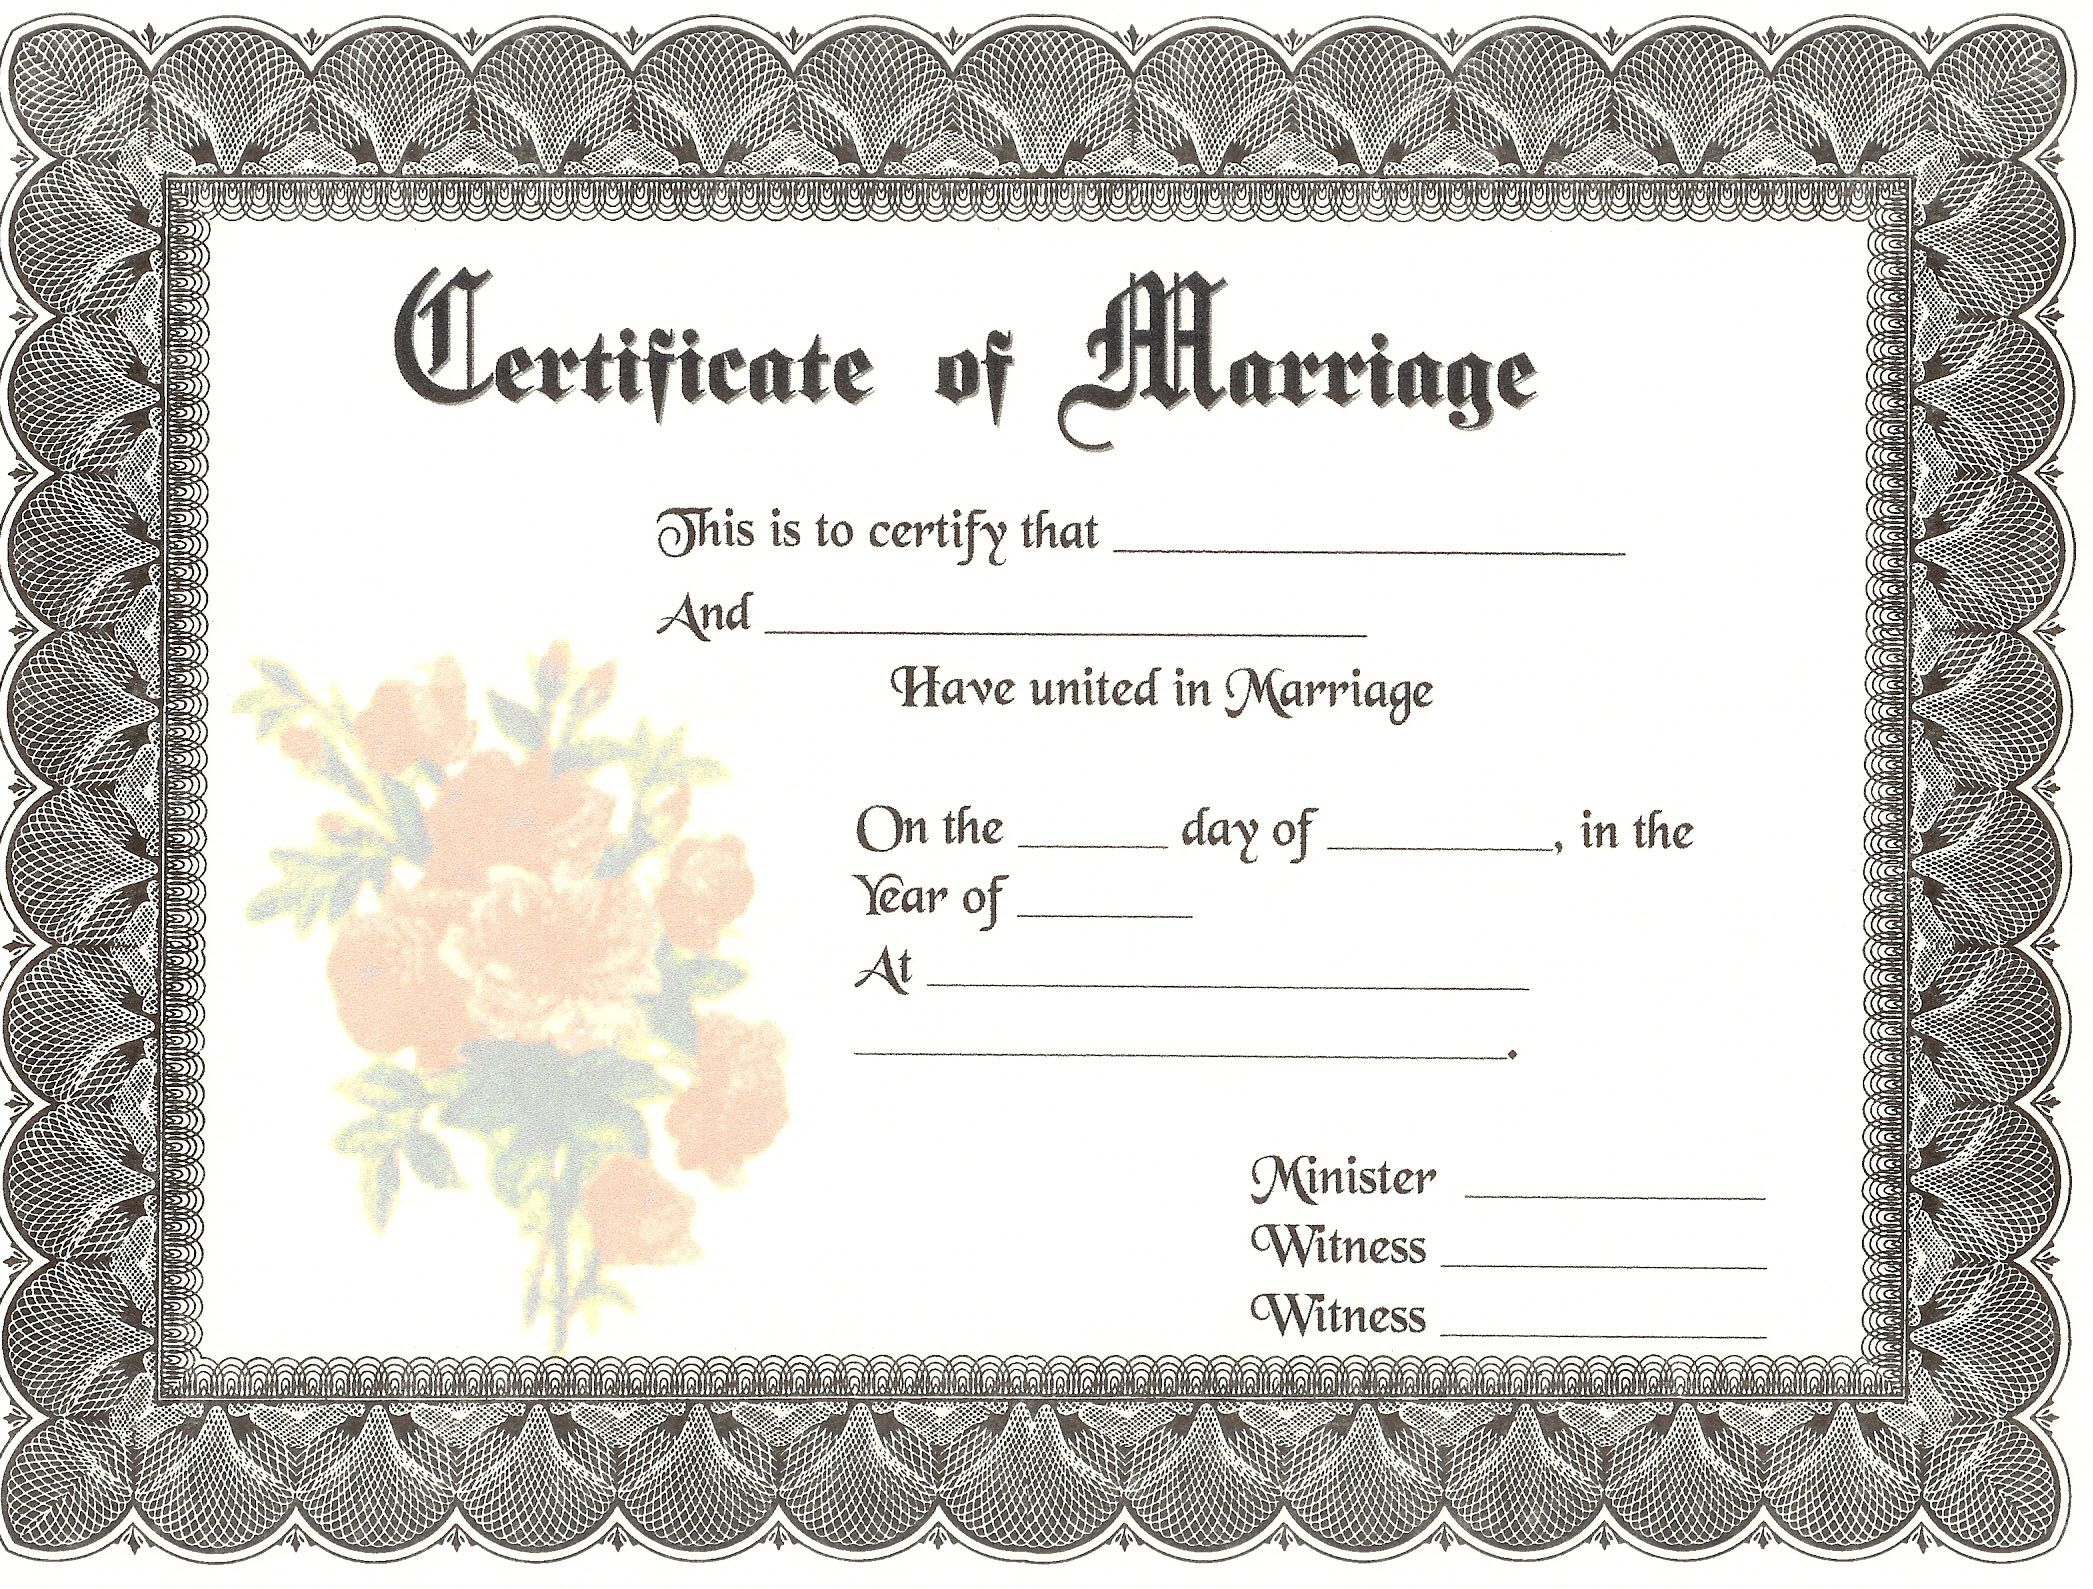 marriage certificate Blank Template - Imgflip Throughout Certificate Of Marriage Template